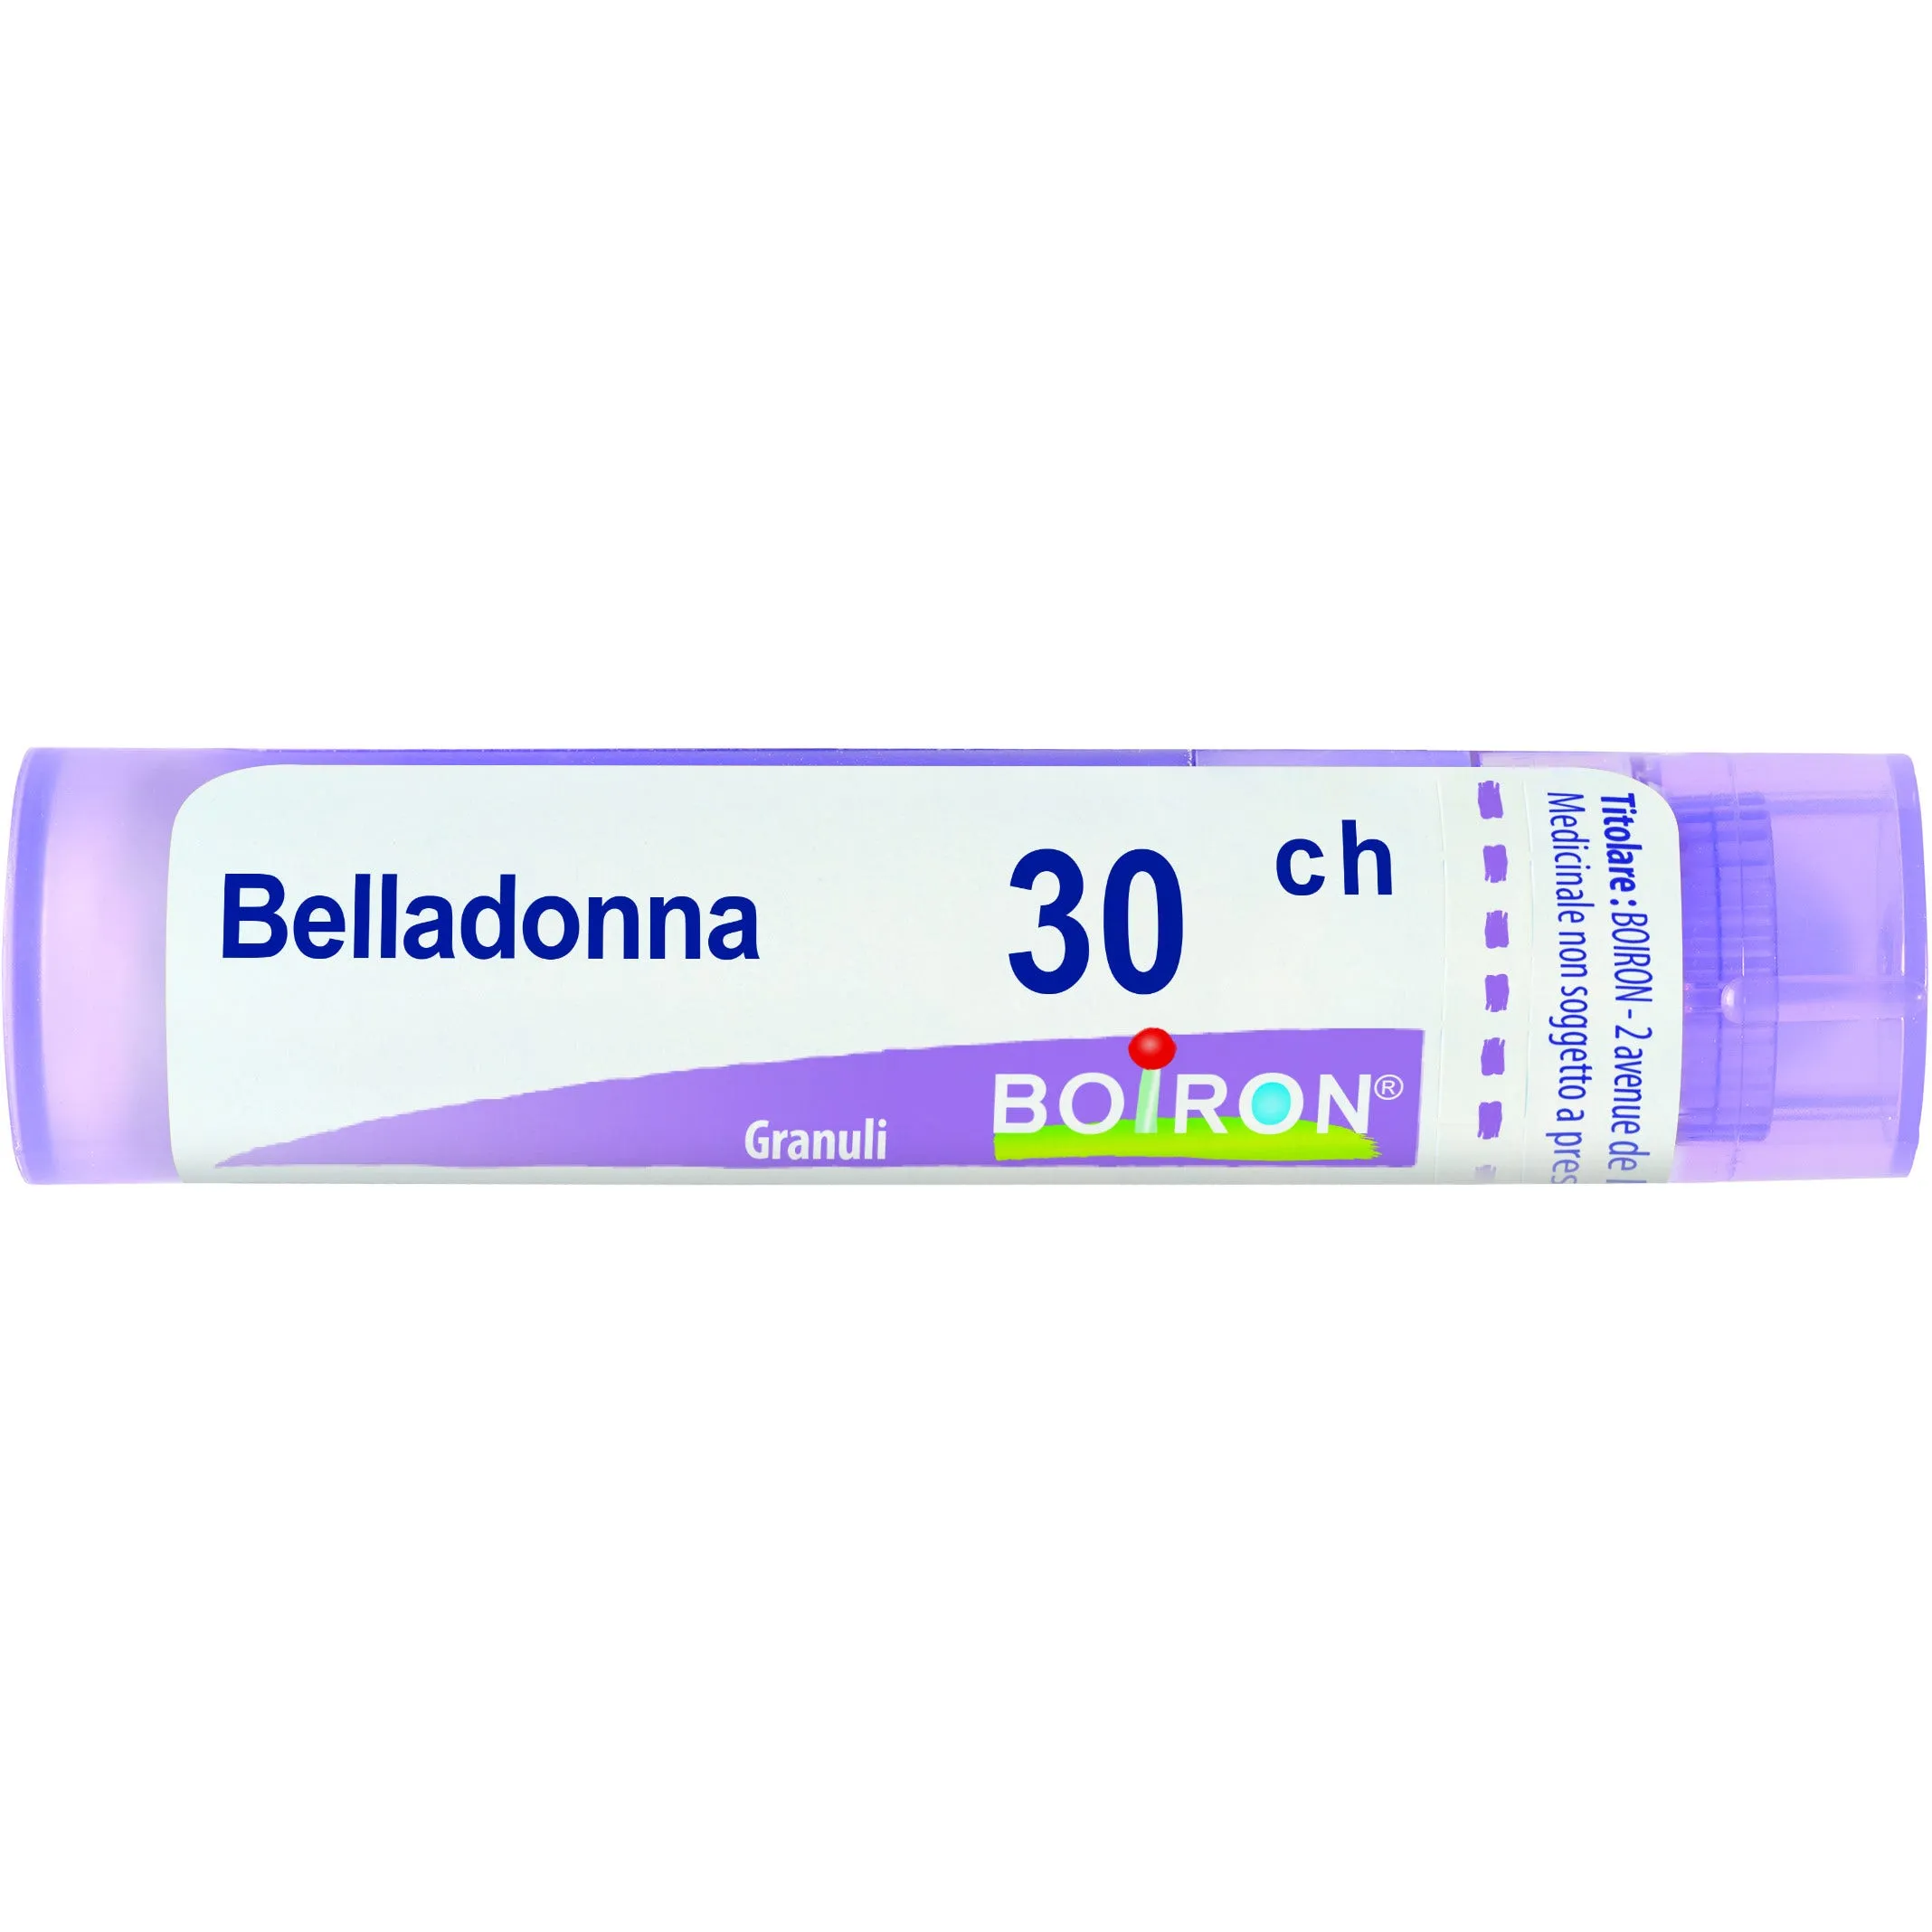 Boiron Belladonna 30CH Granuli Tubo